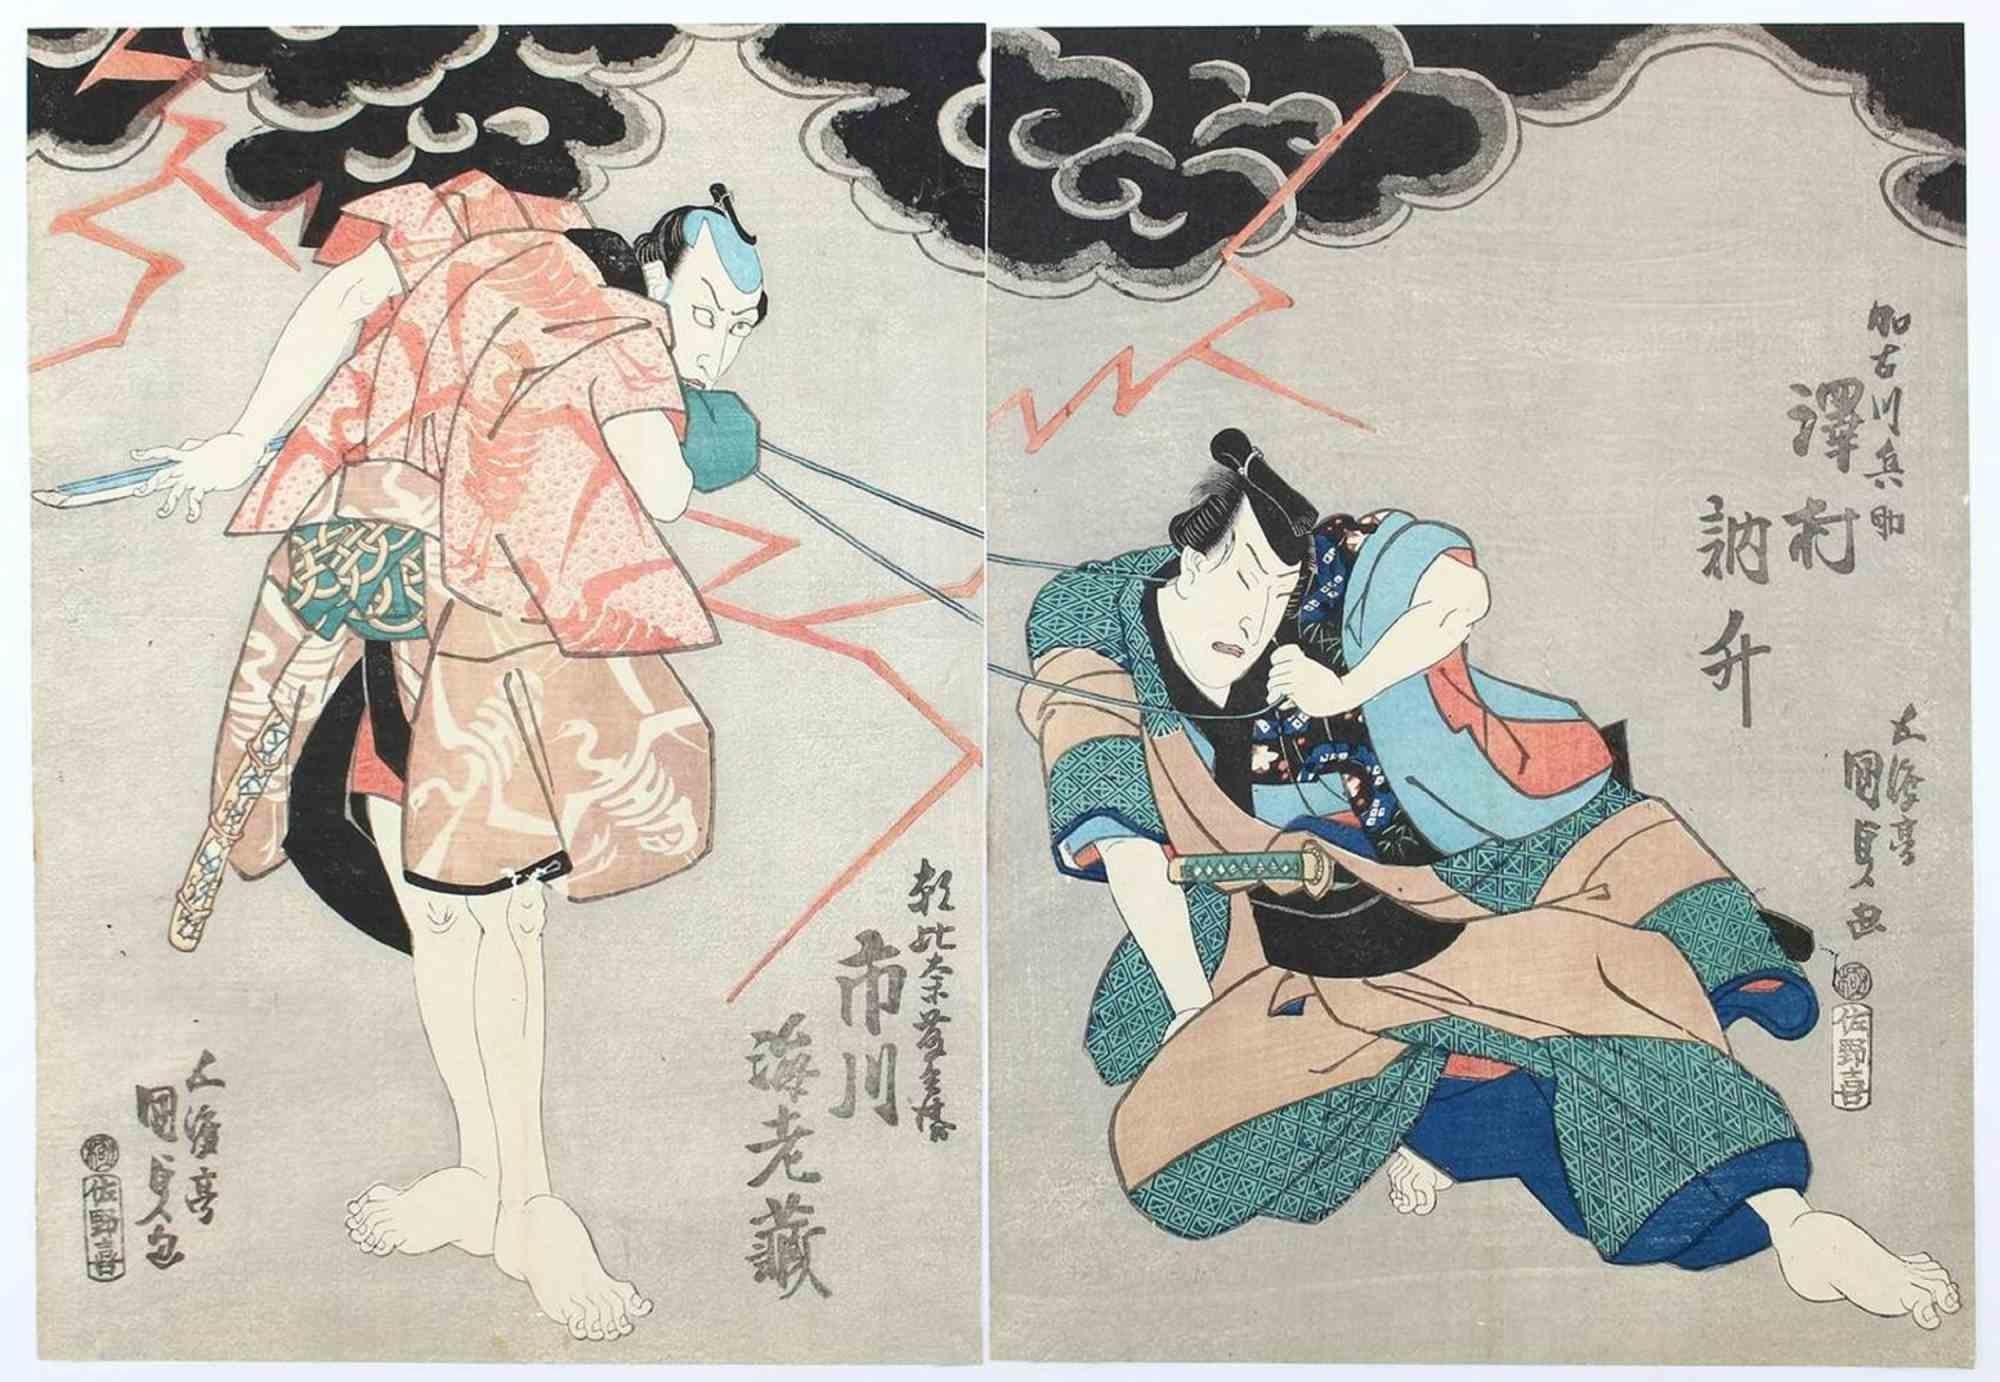 Utagawa Kunisada (Toyokuni III) Figurative Print - Two Actors in a Fight Scene with Lightning and... by Utagawa Kunisada - 1820s